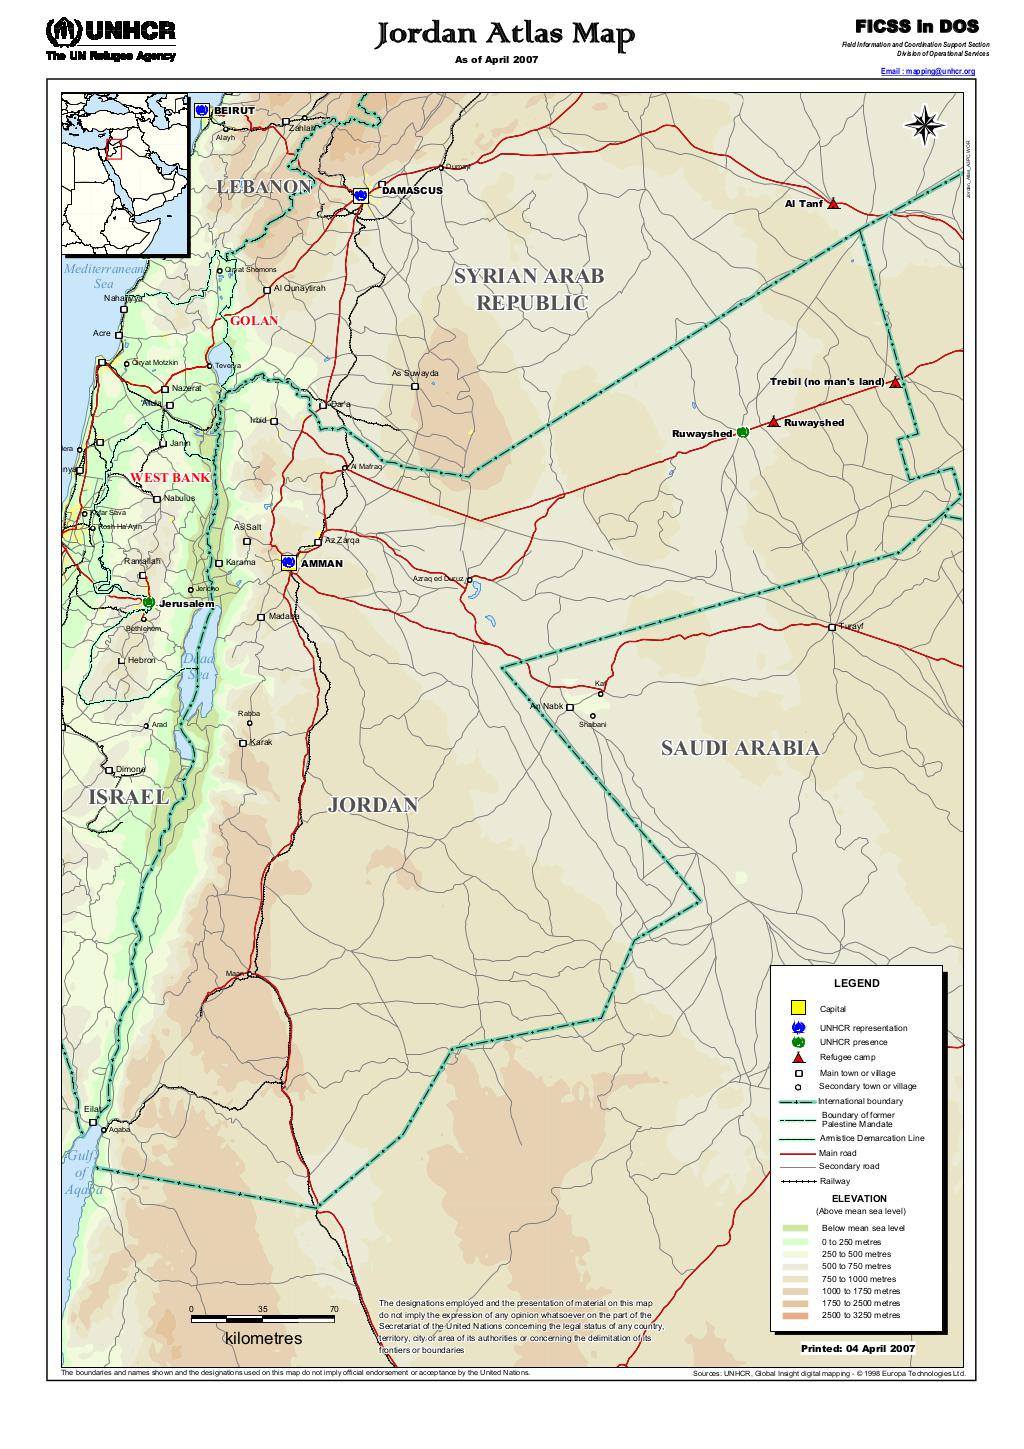 Document - Jordan Atlas Map - April 2007